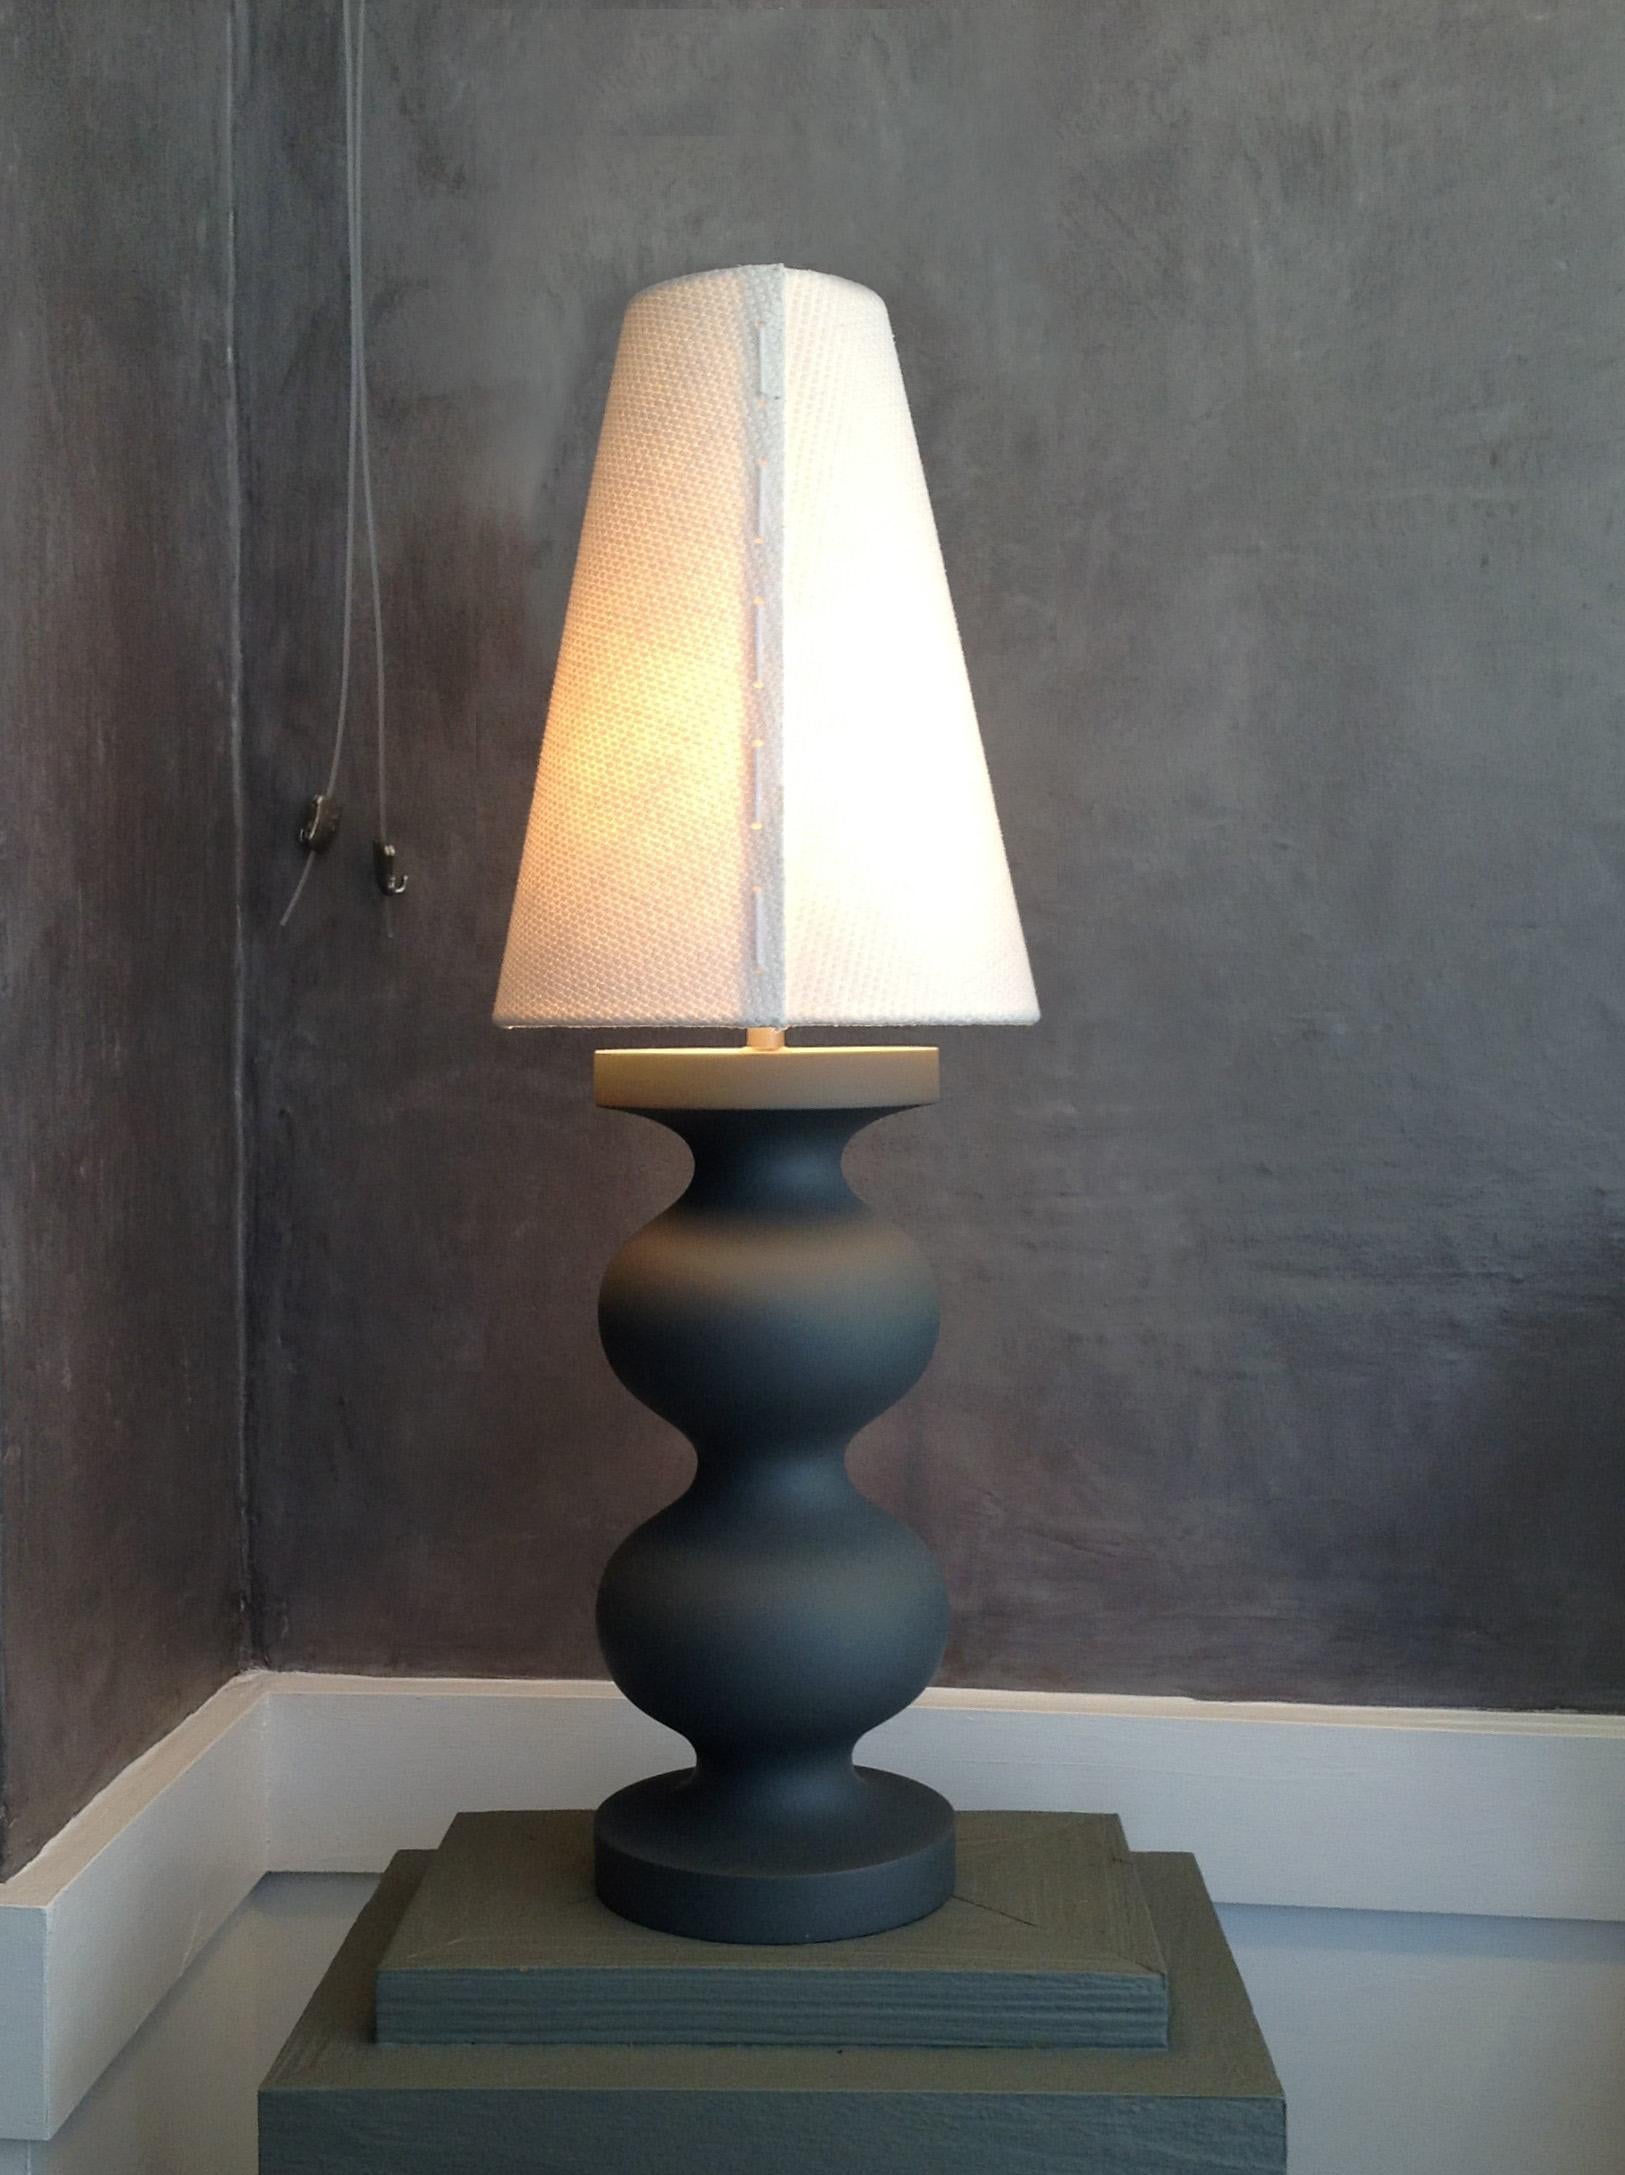 Double Frank Table Lamp by Wende Reid - Organic Modern, Sculptural, Minimal 2